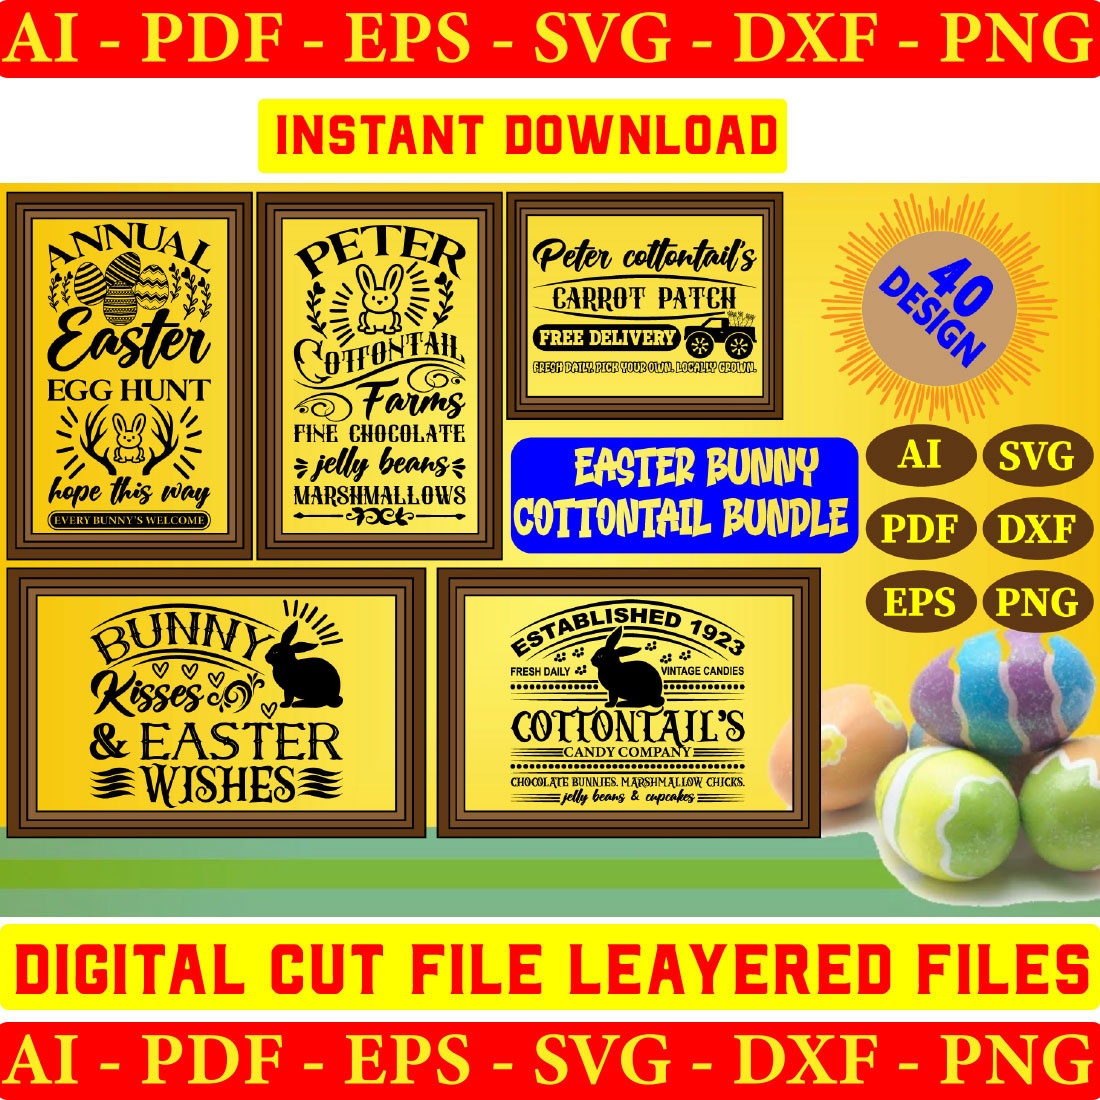 Easter Bunny Cottontail Bundle SVG 40 Designs Vol-06 preview image.